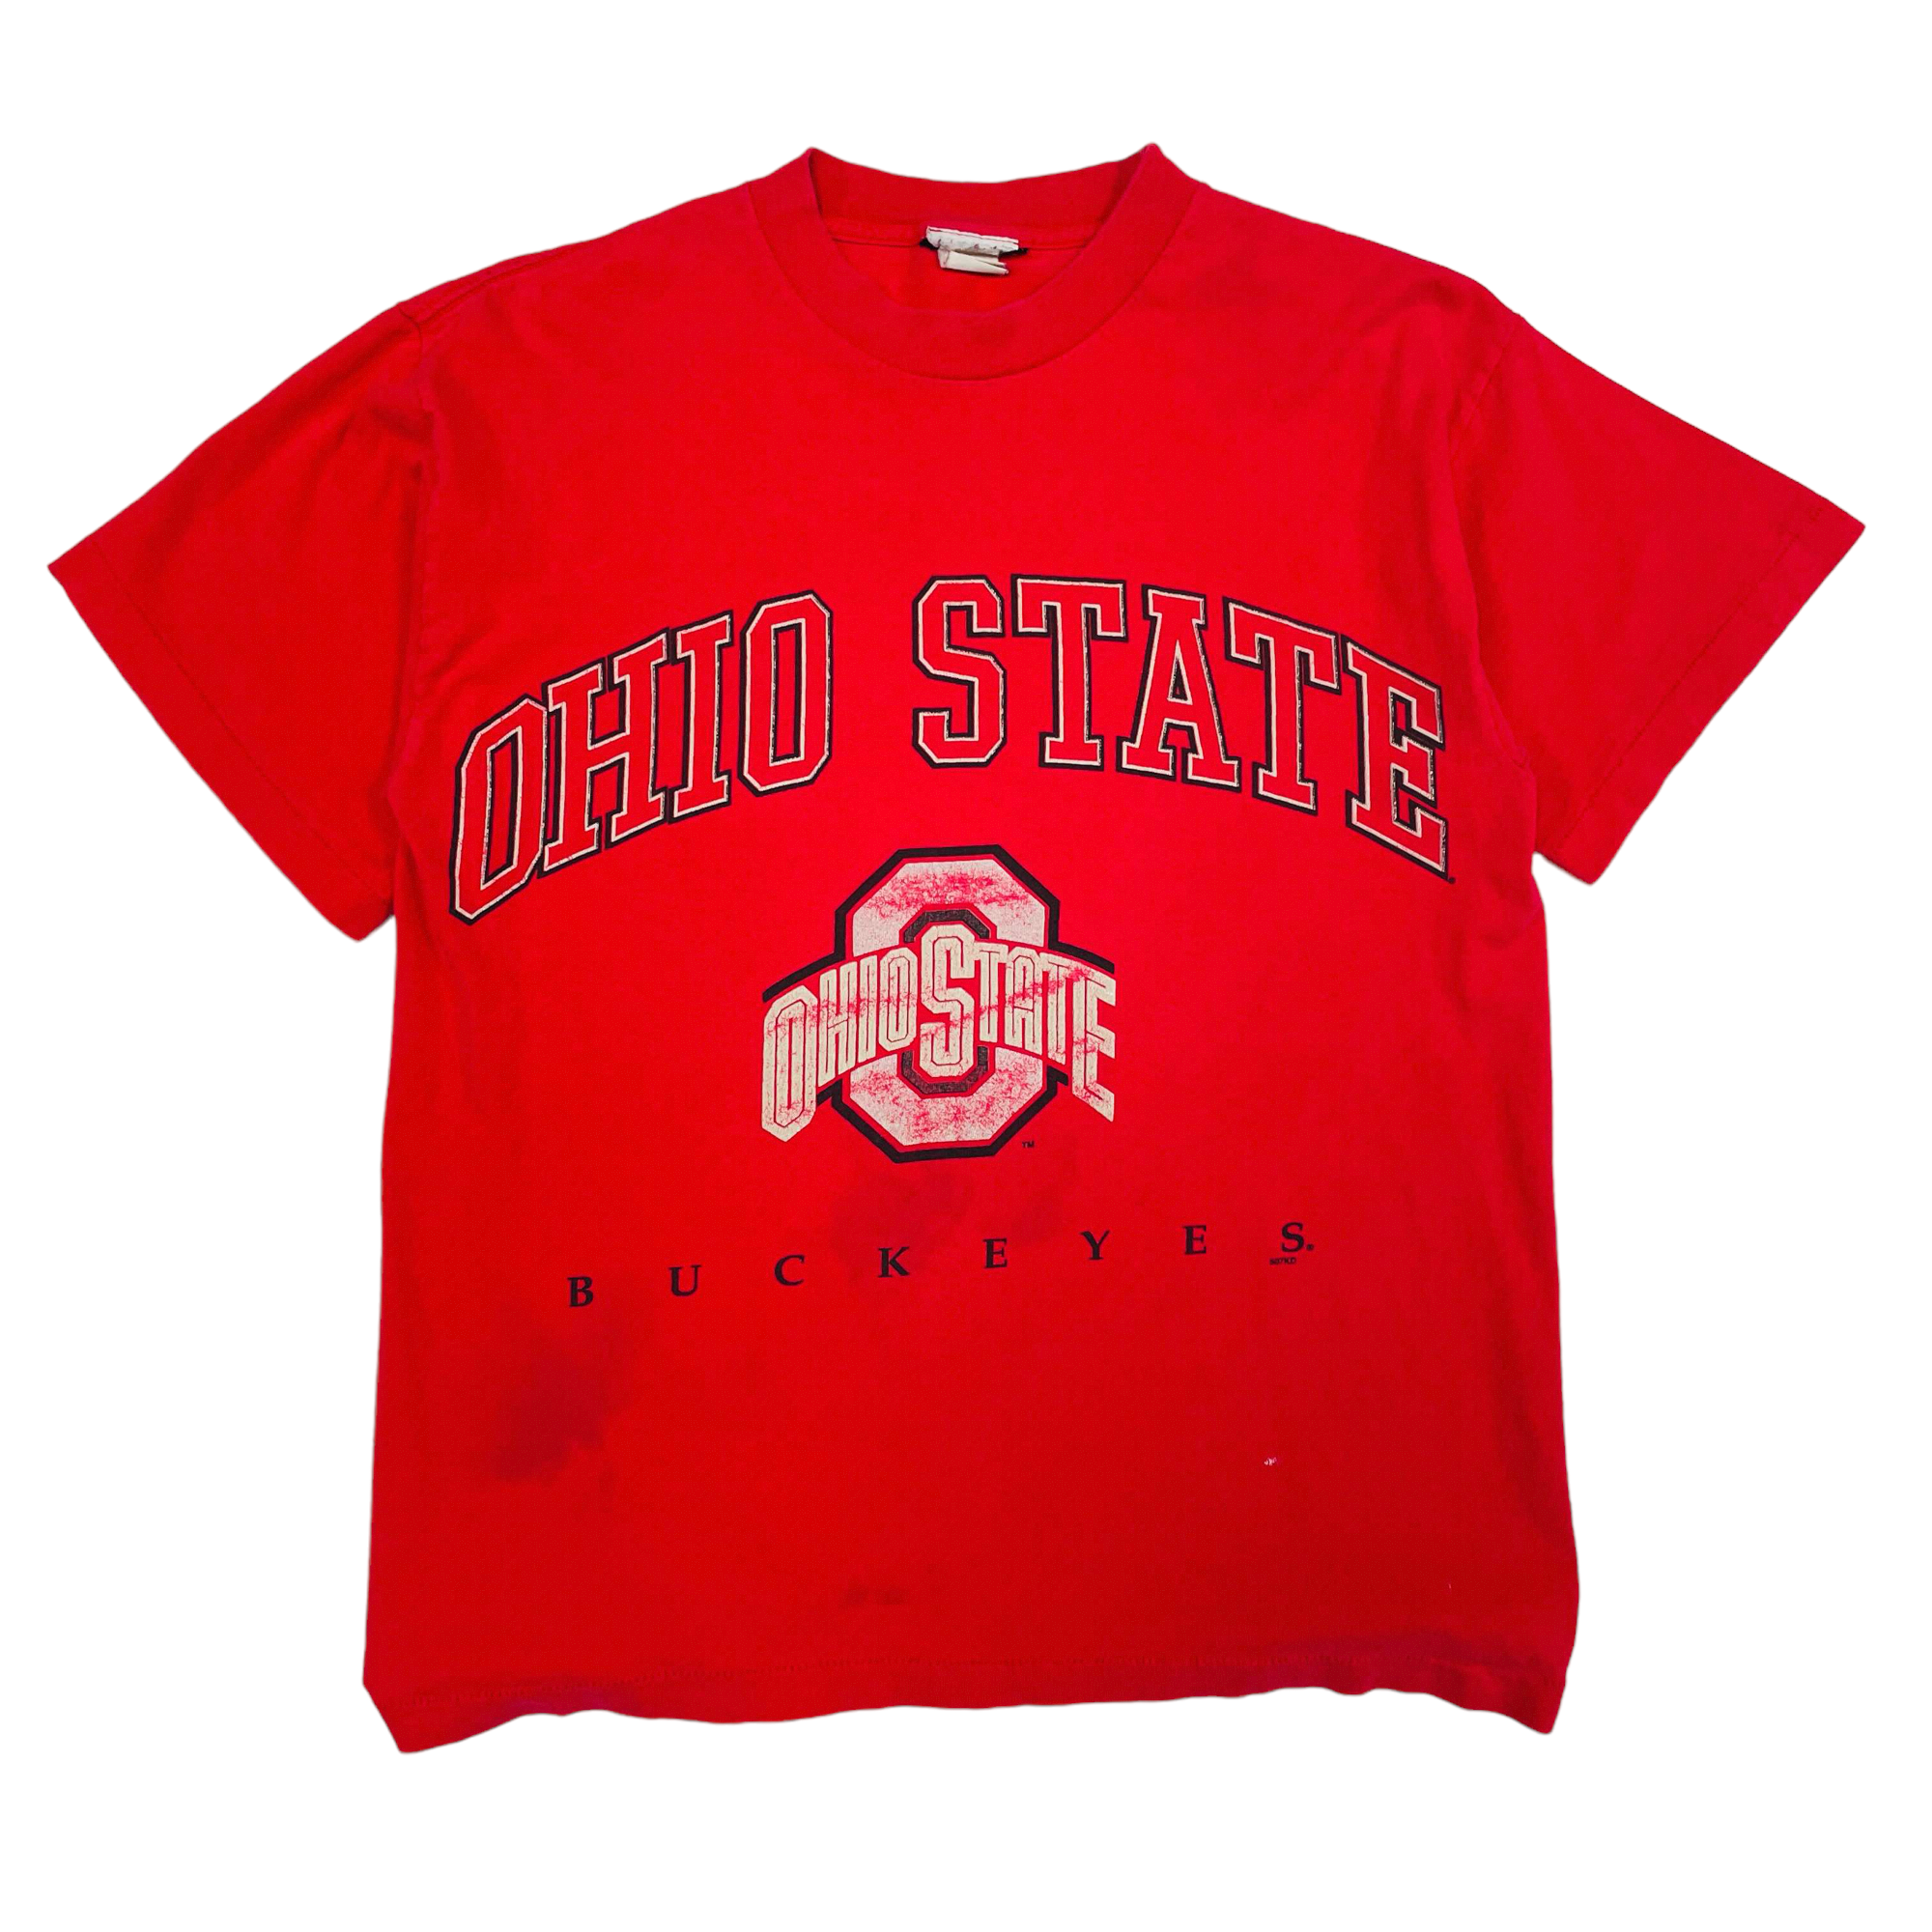 Single Stitched Ohio State Buckeyes American Football T-Shirt - Small